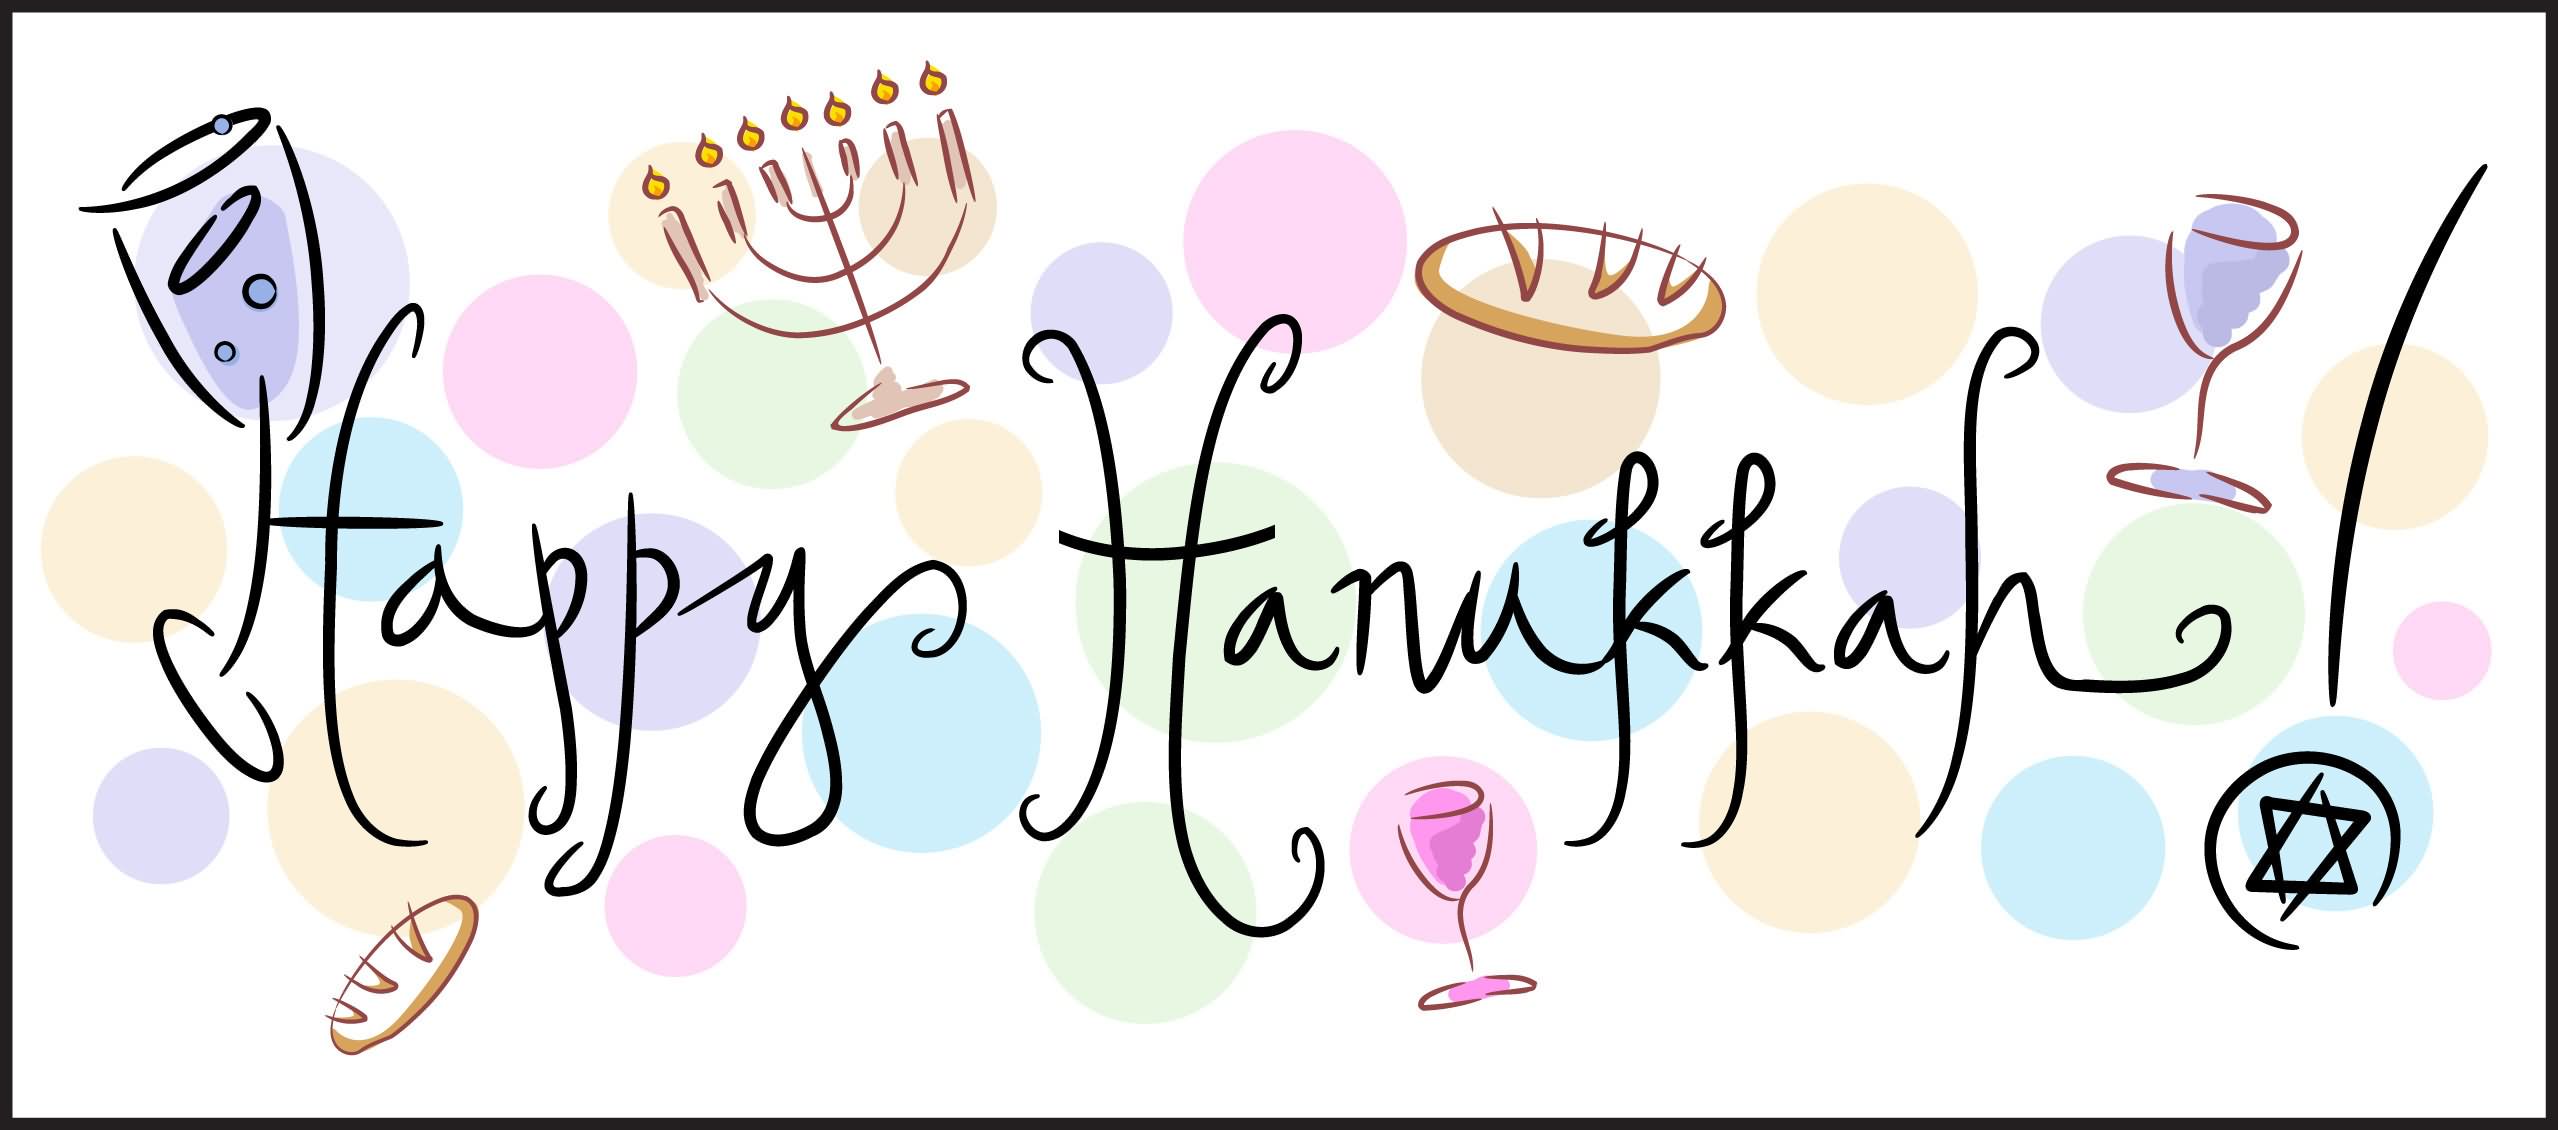 Happy Hanukkah Facebook Cover Picture